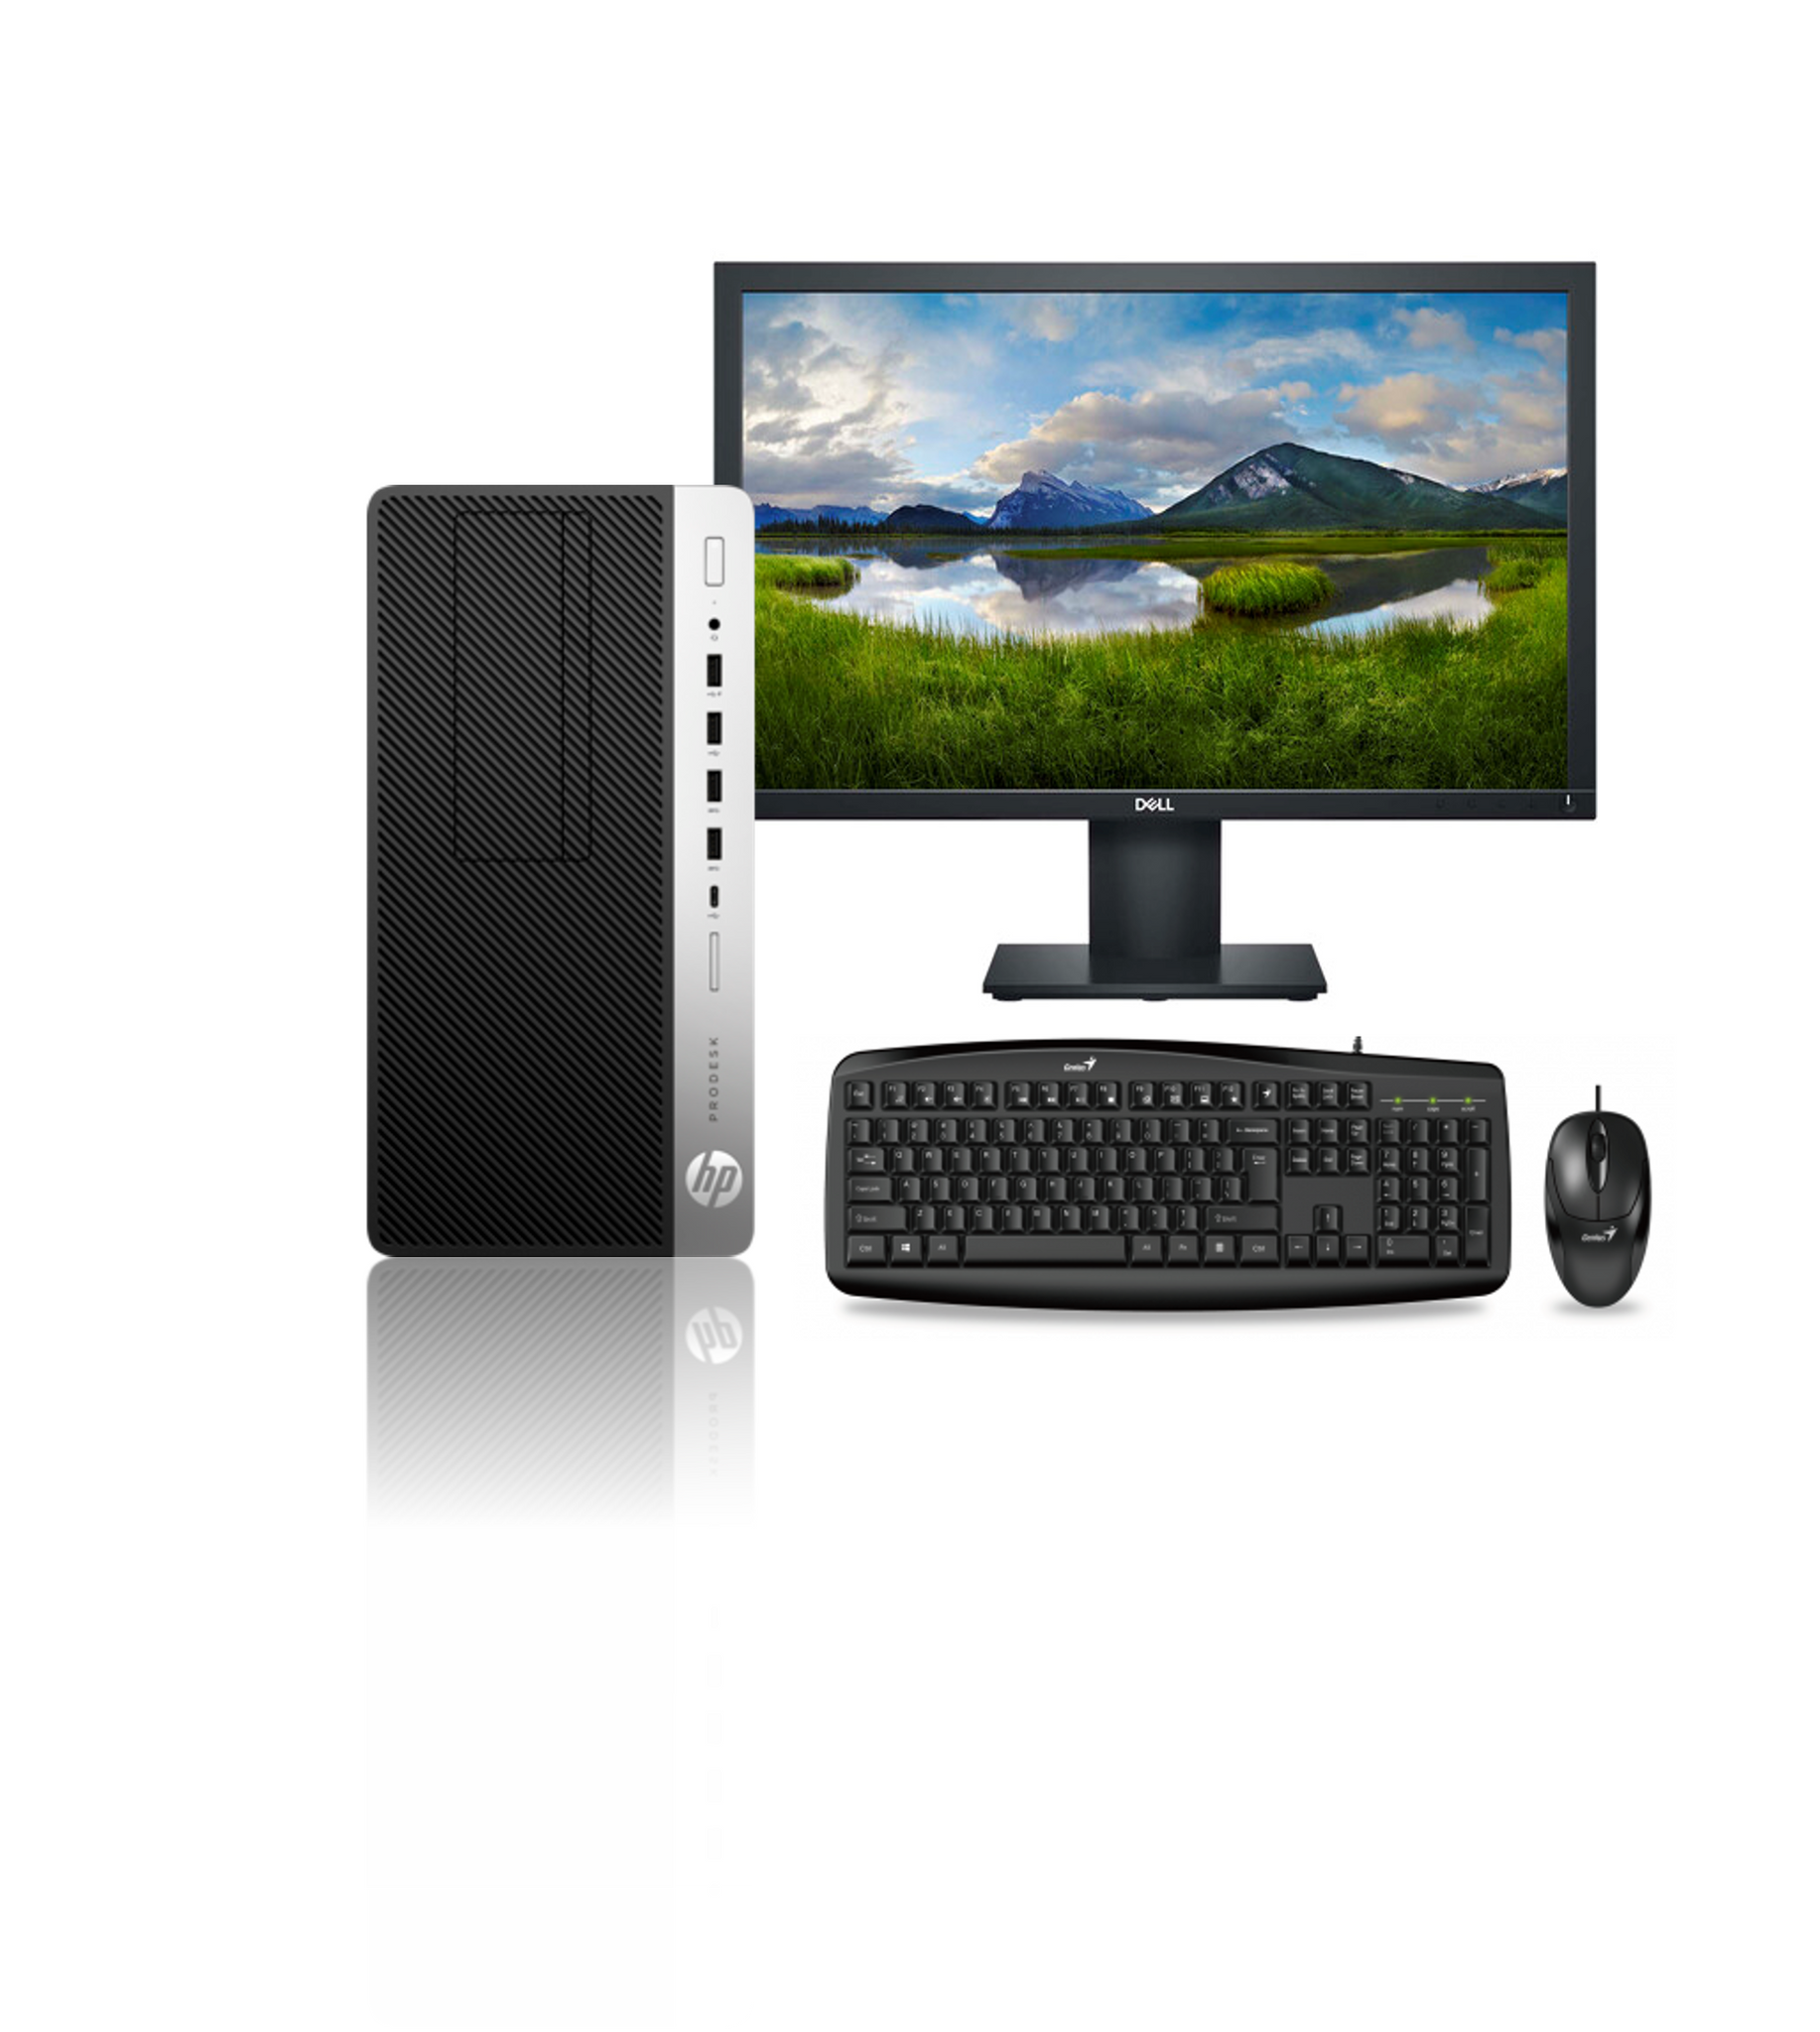 KIT MONITOR + PC Hp Prodesk 600 G4 MT (i5 8GB 256GB SSD) + Teclado & Mouse Reacondicionado Grado A